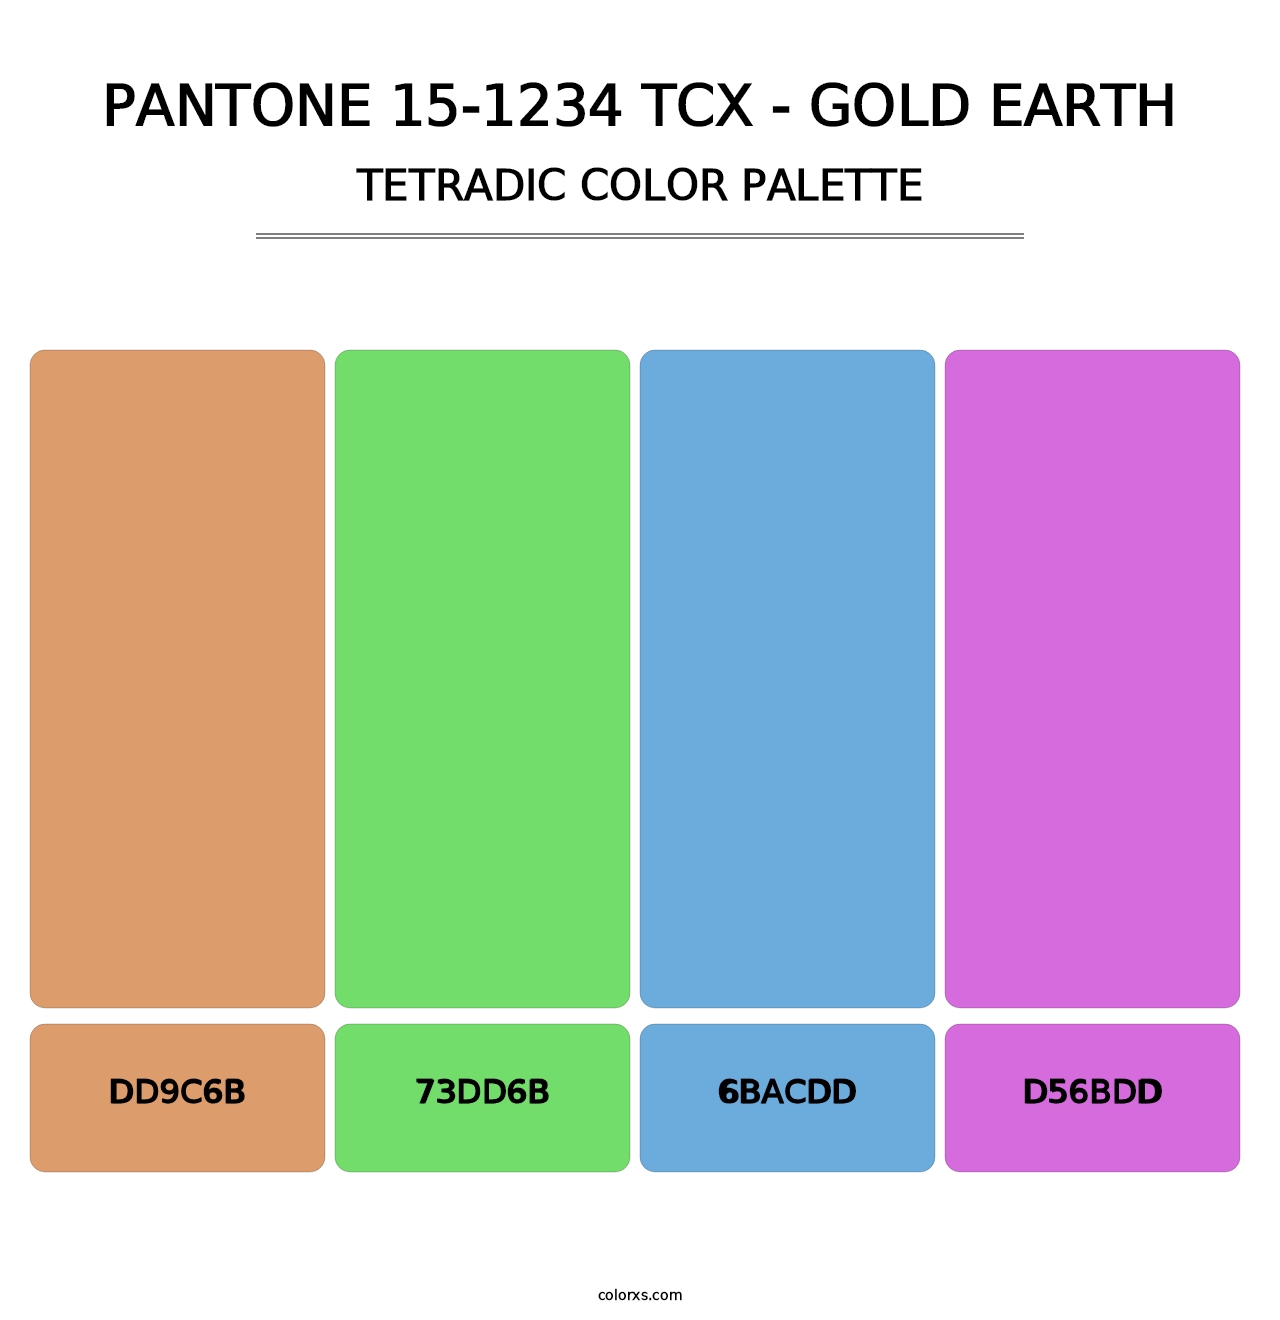 PANTONE 15-1234 TCX - Gold Earth - Tetradic Color Palette